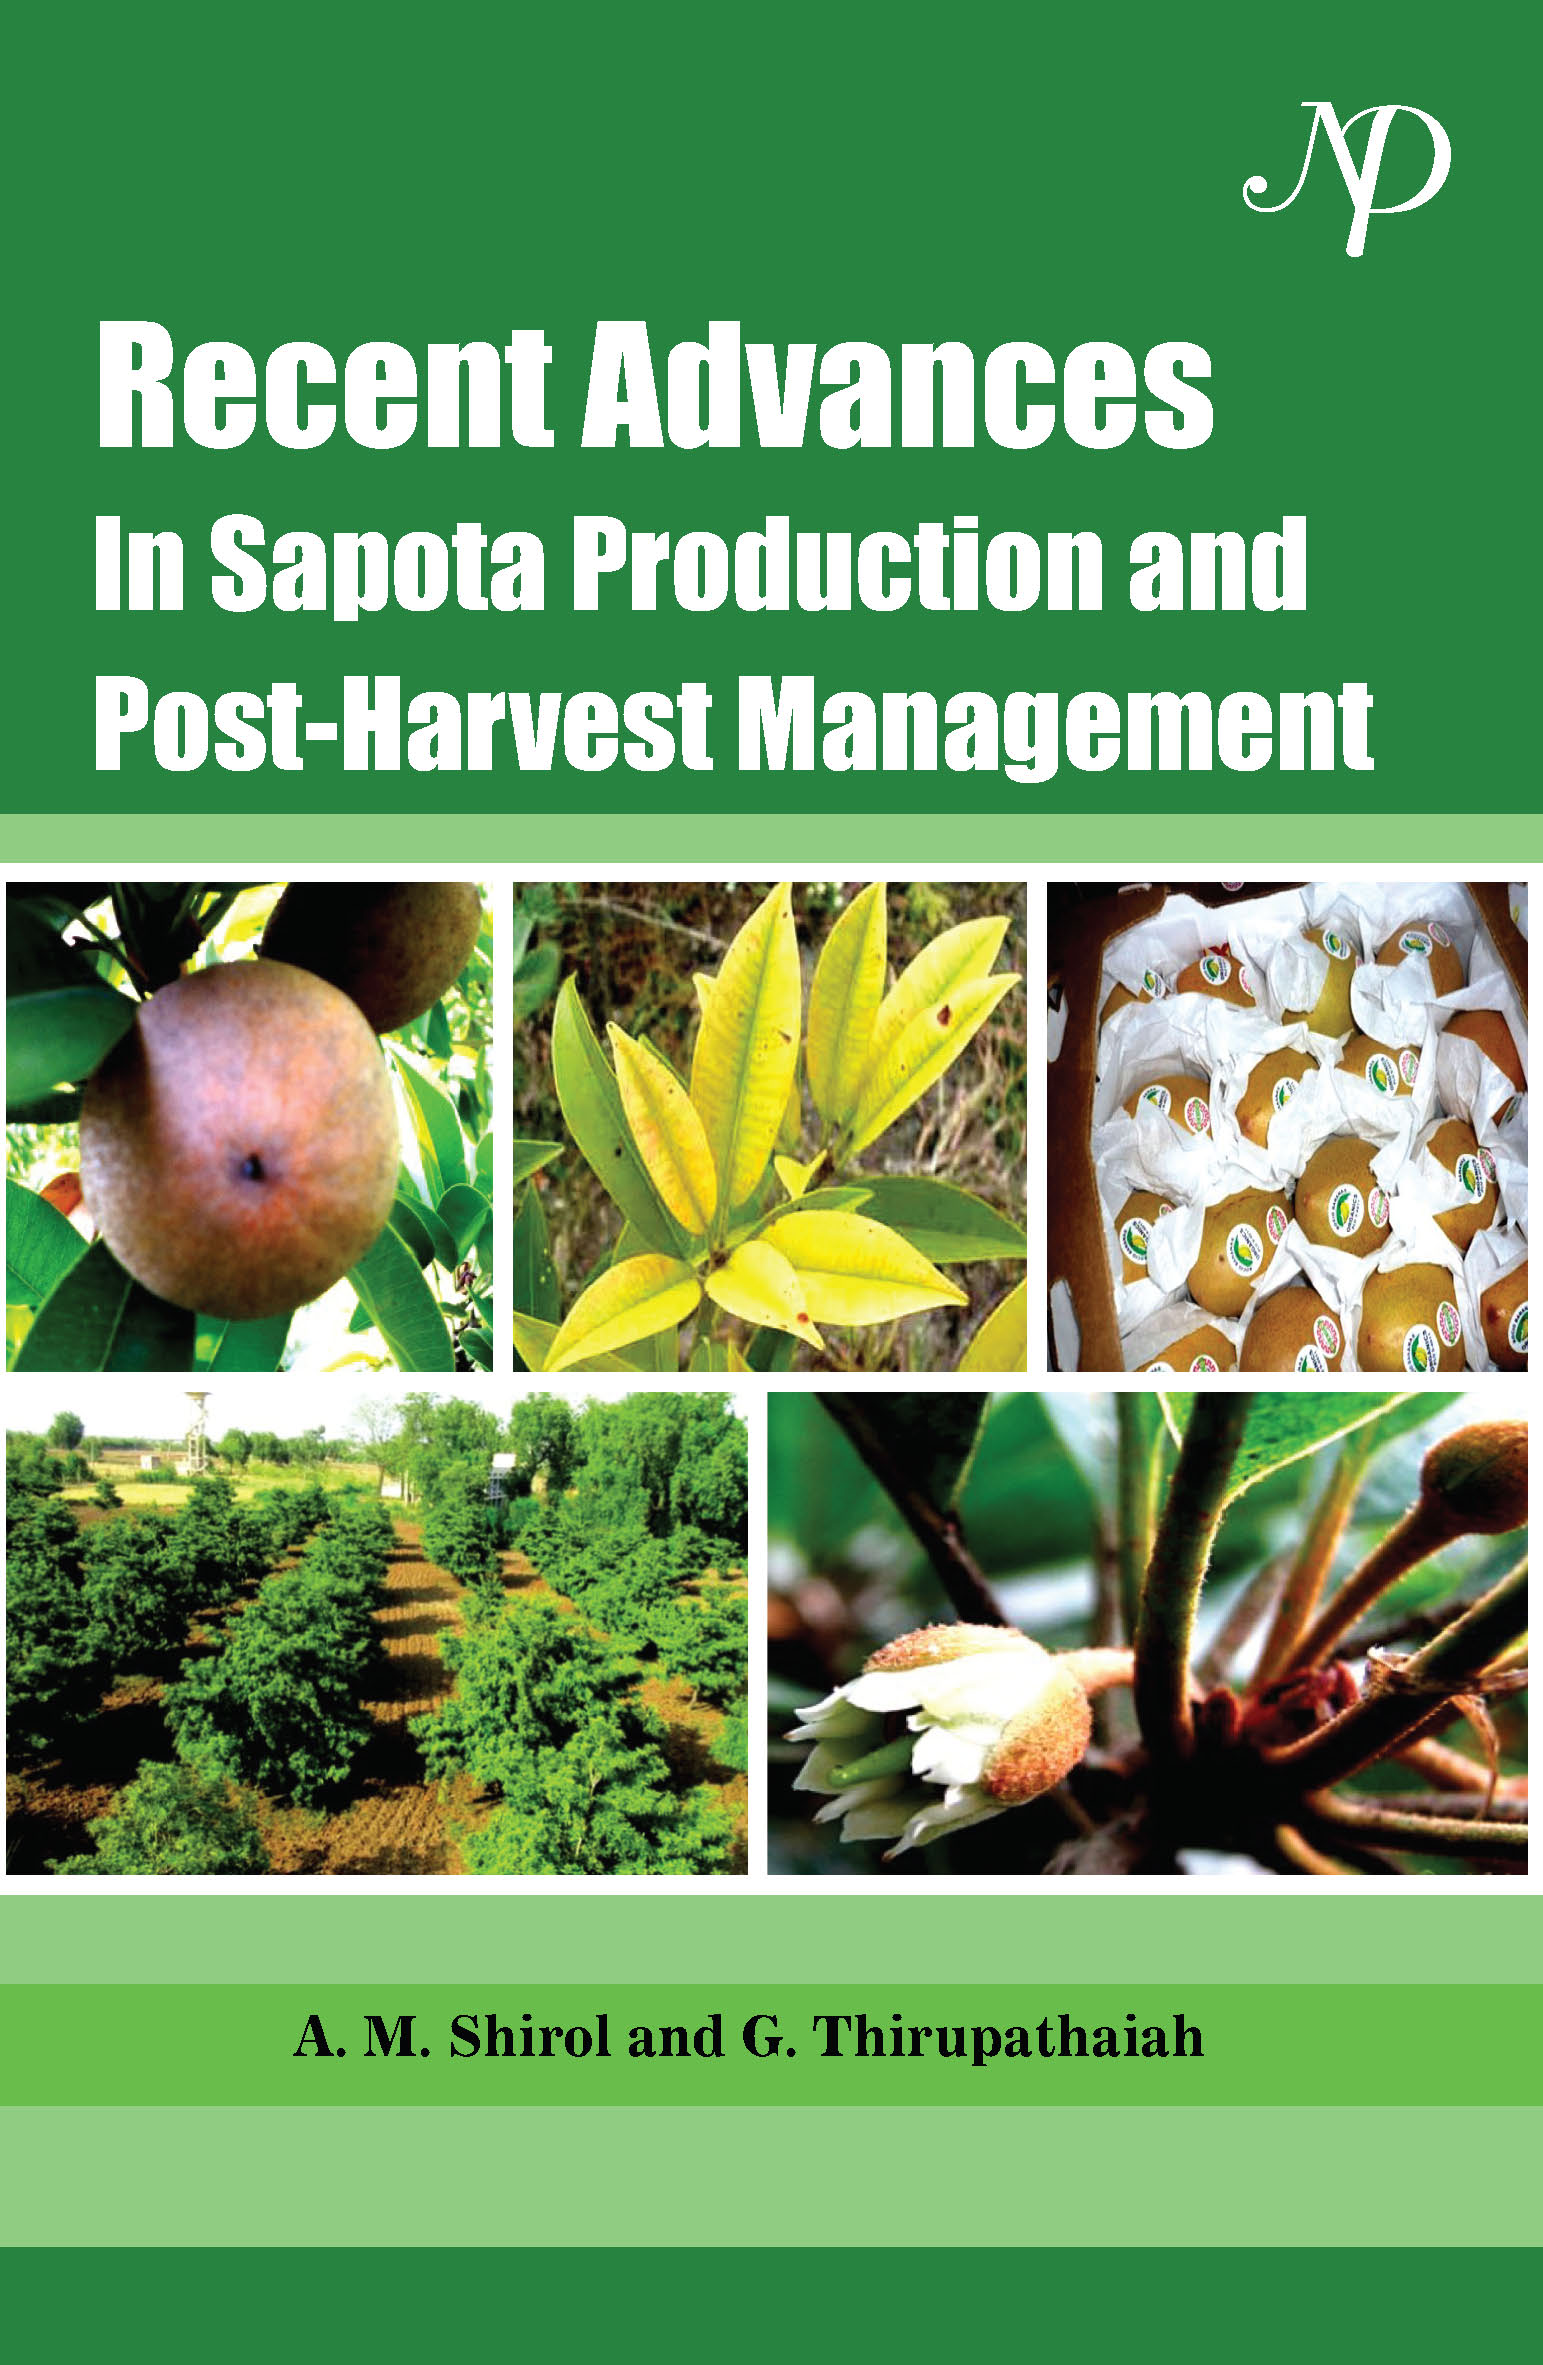 Cover Sapota- Improvement, Production and Post - Harvest Management final.jpg